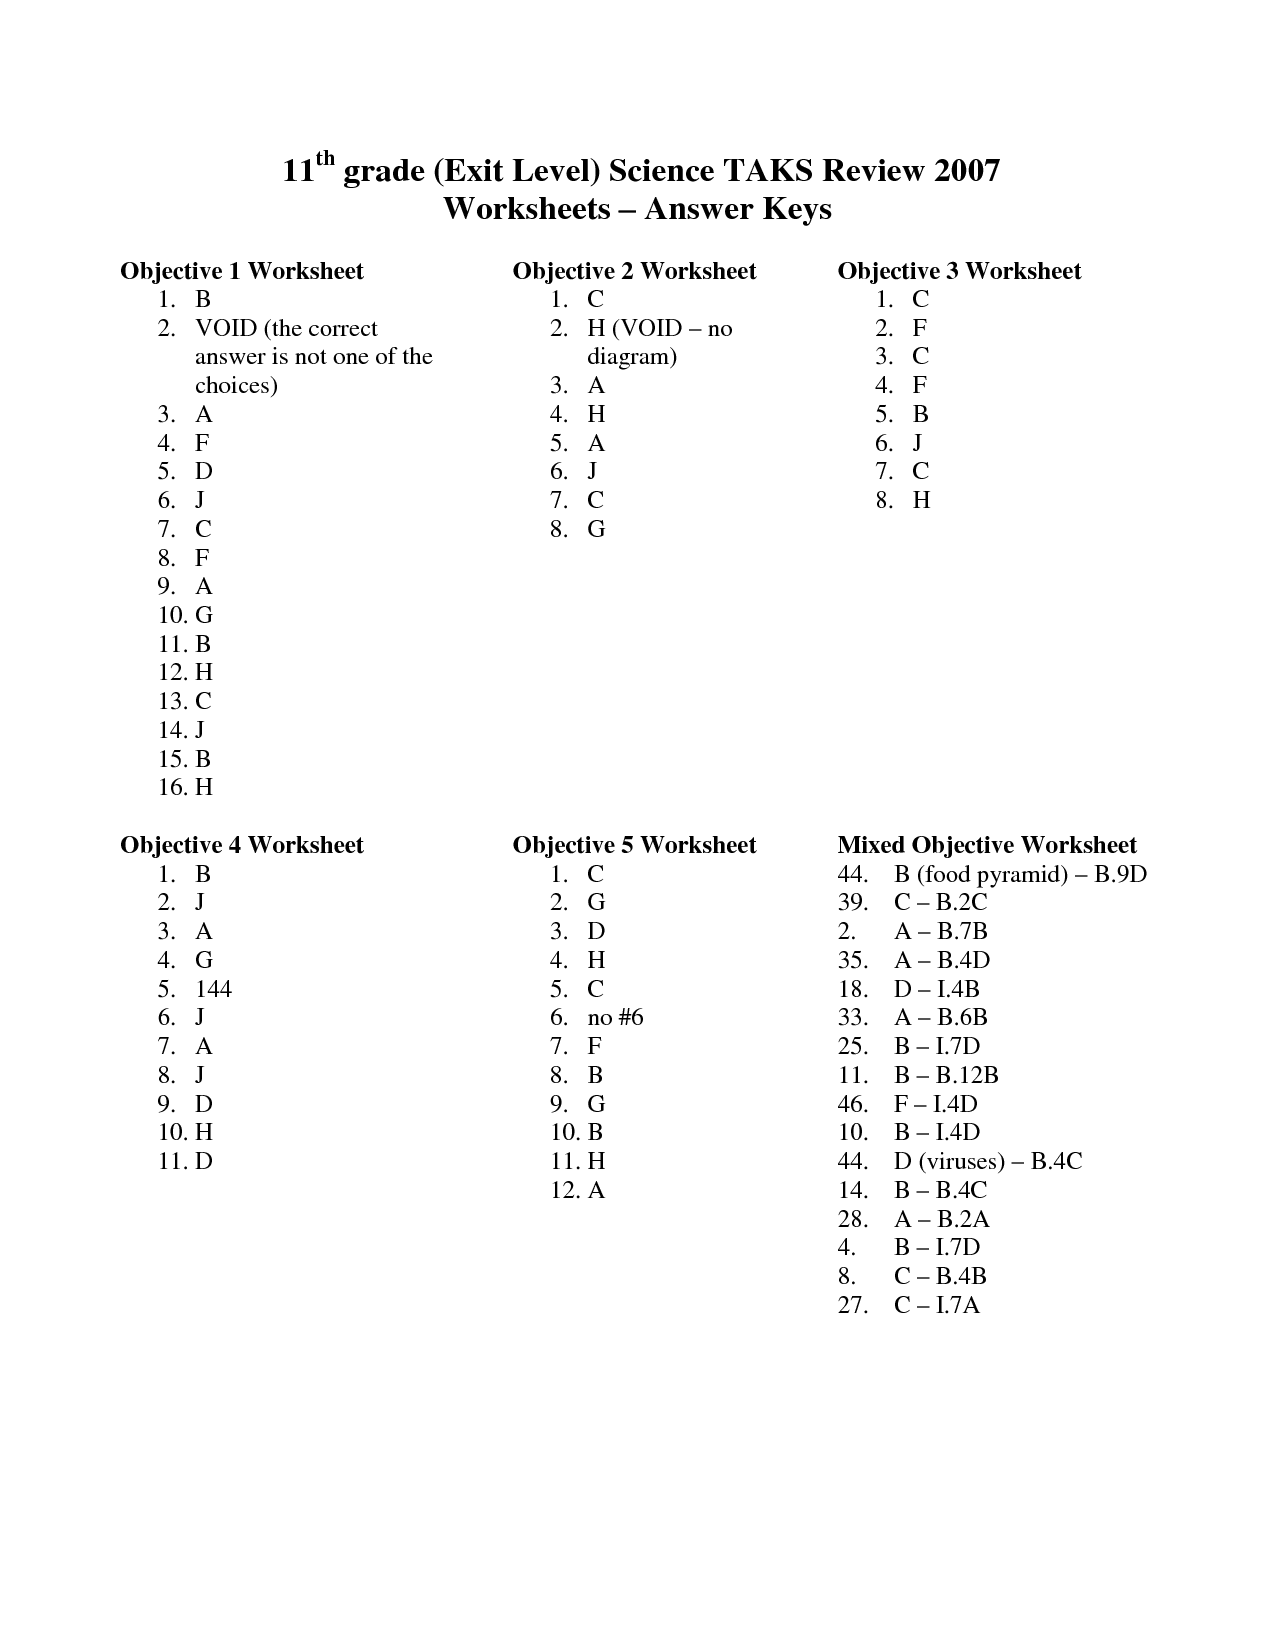 Chemistry Worksheet Category Page 2 - worksheeto.com